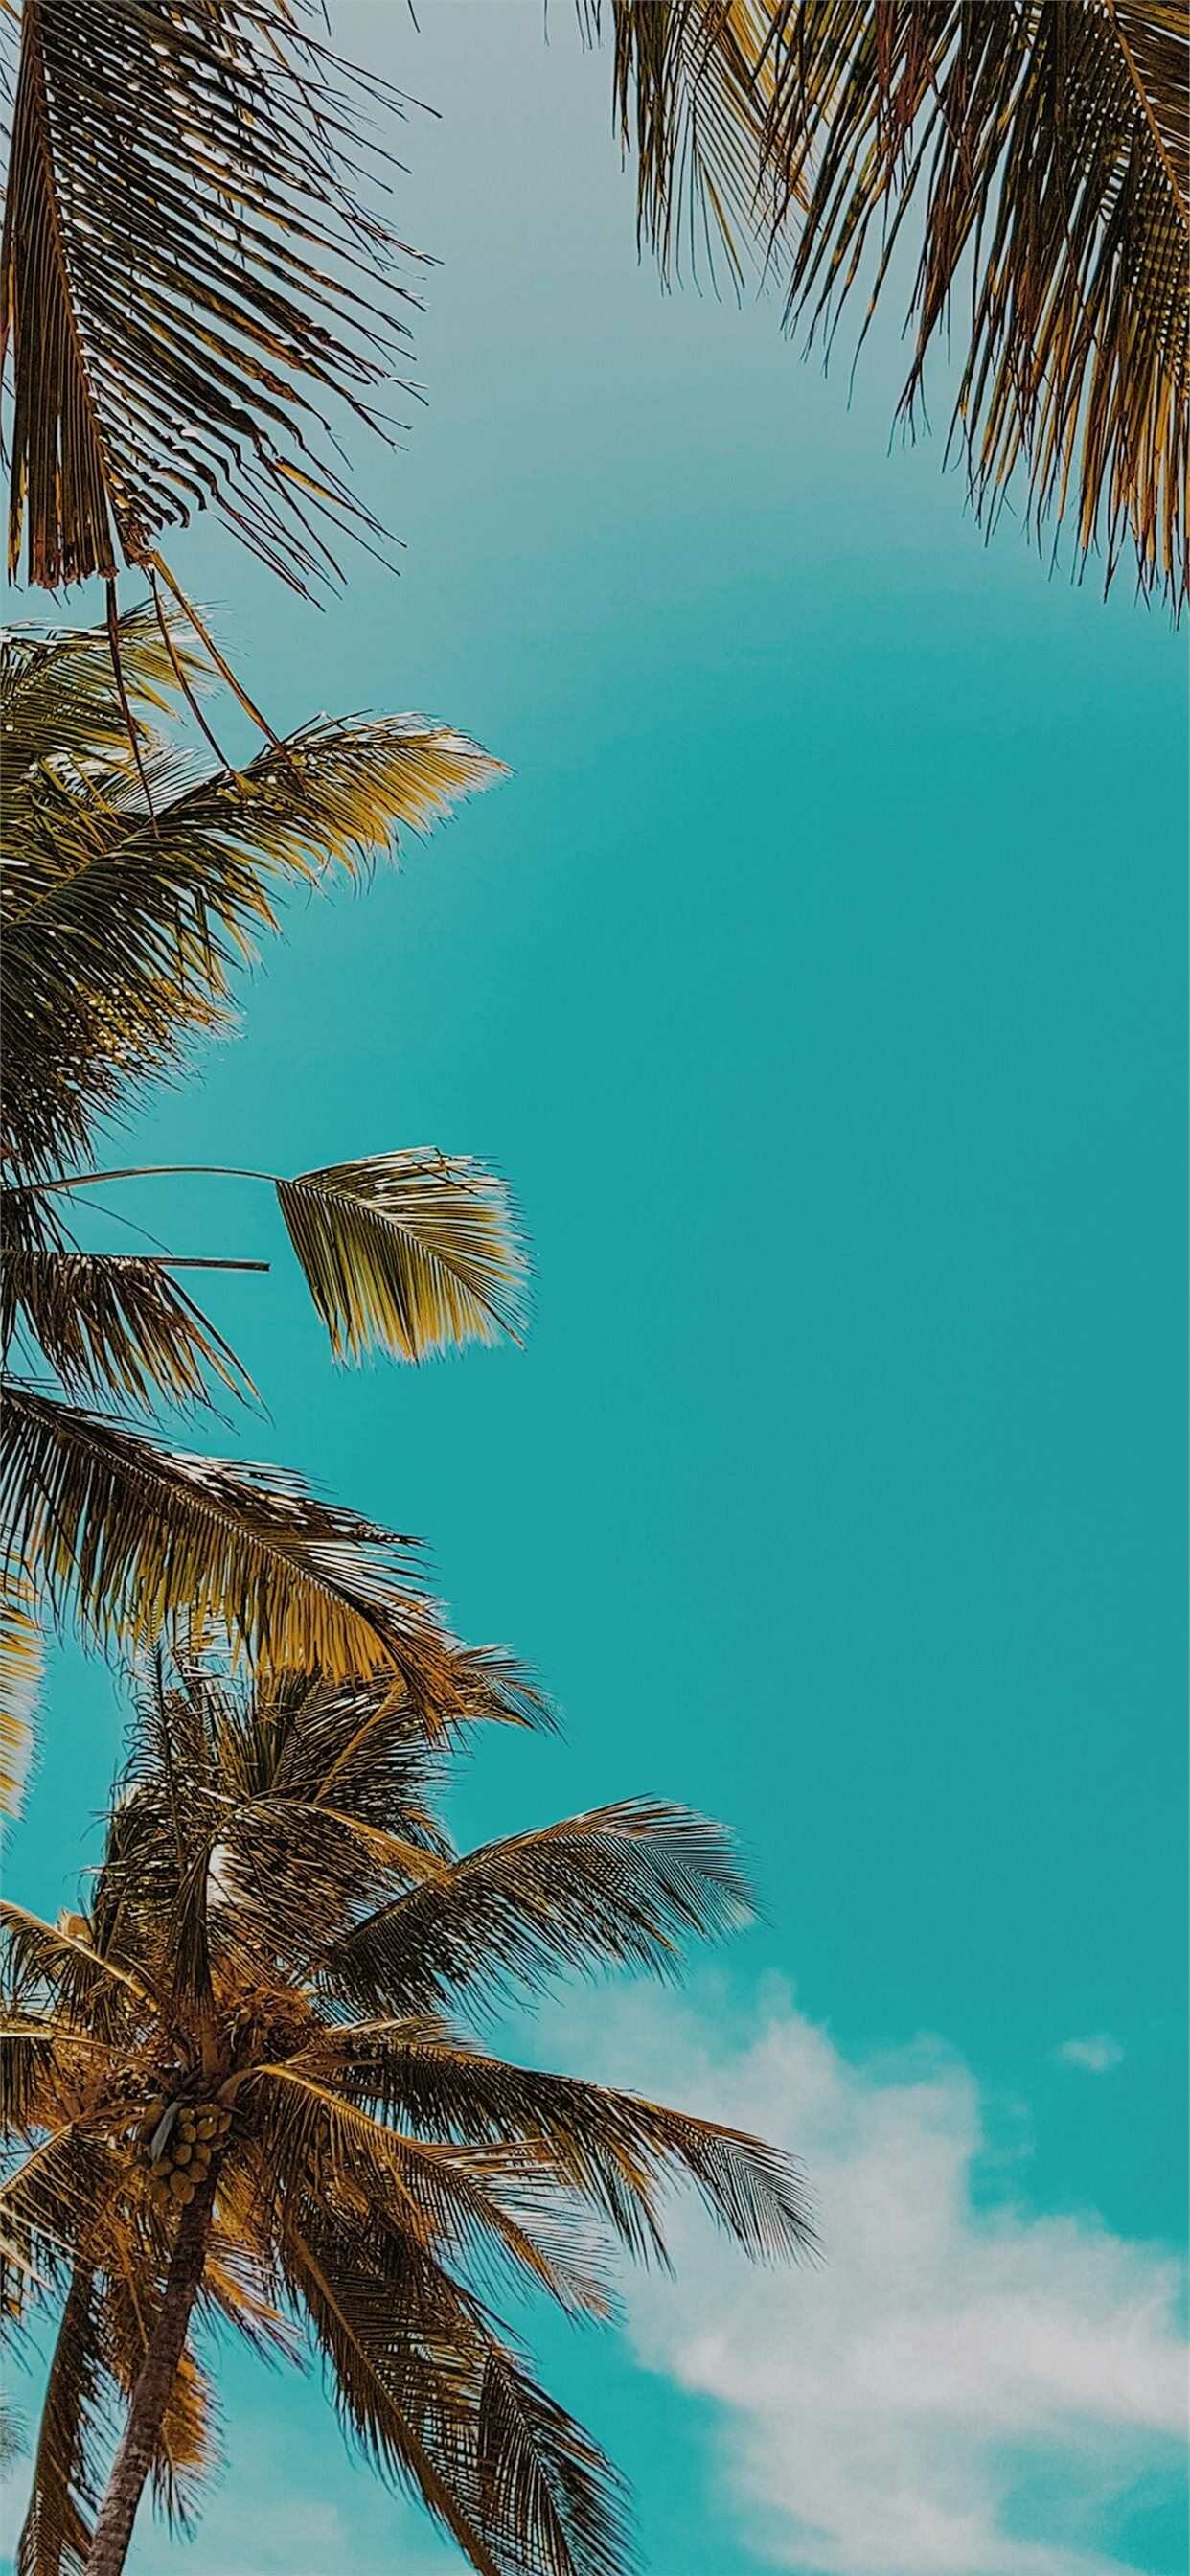 Summer: Hot days, Summering at tropical island paradise. 1250x2690 HD Wallpaper.